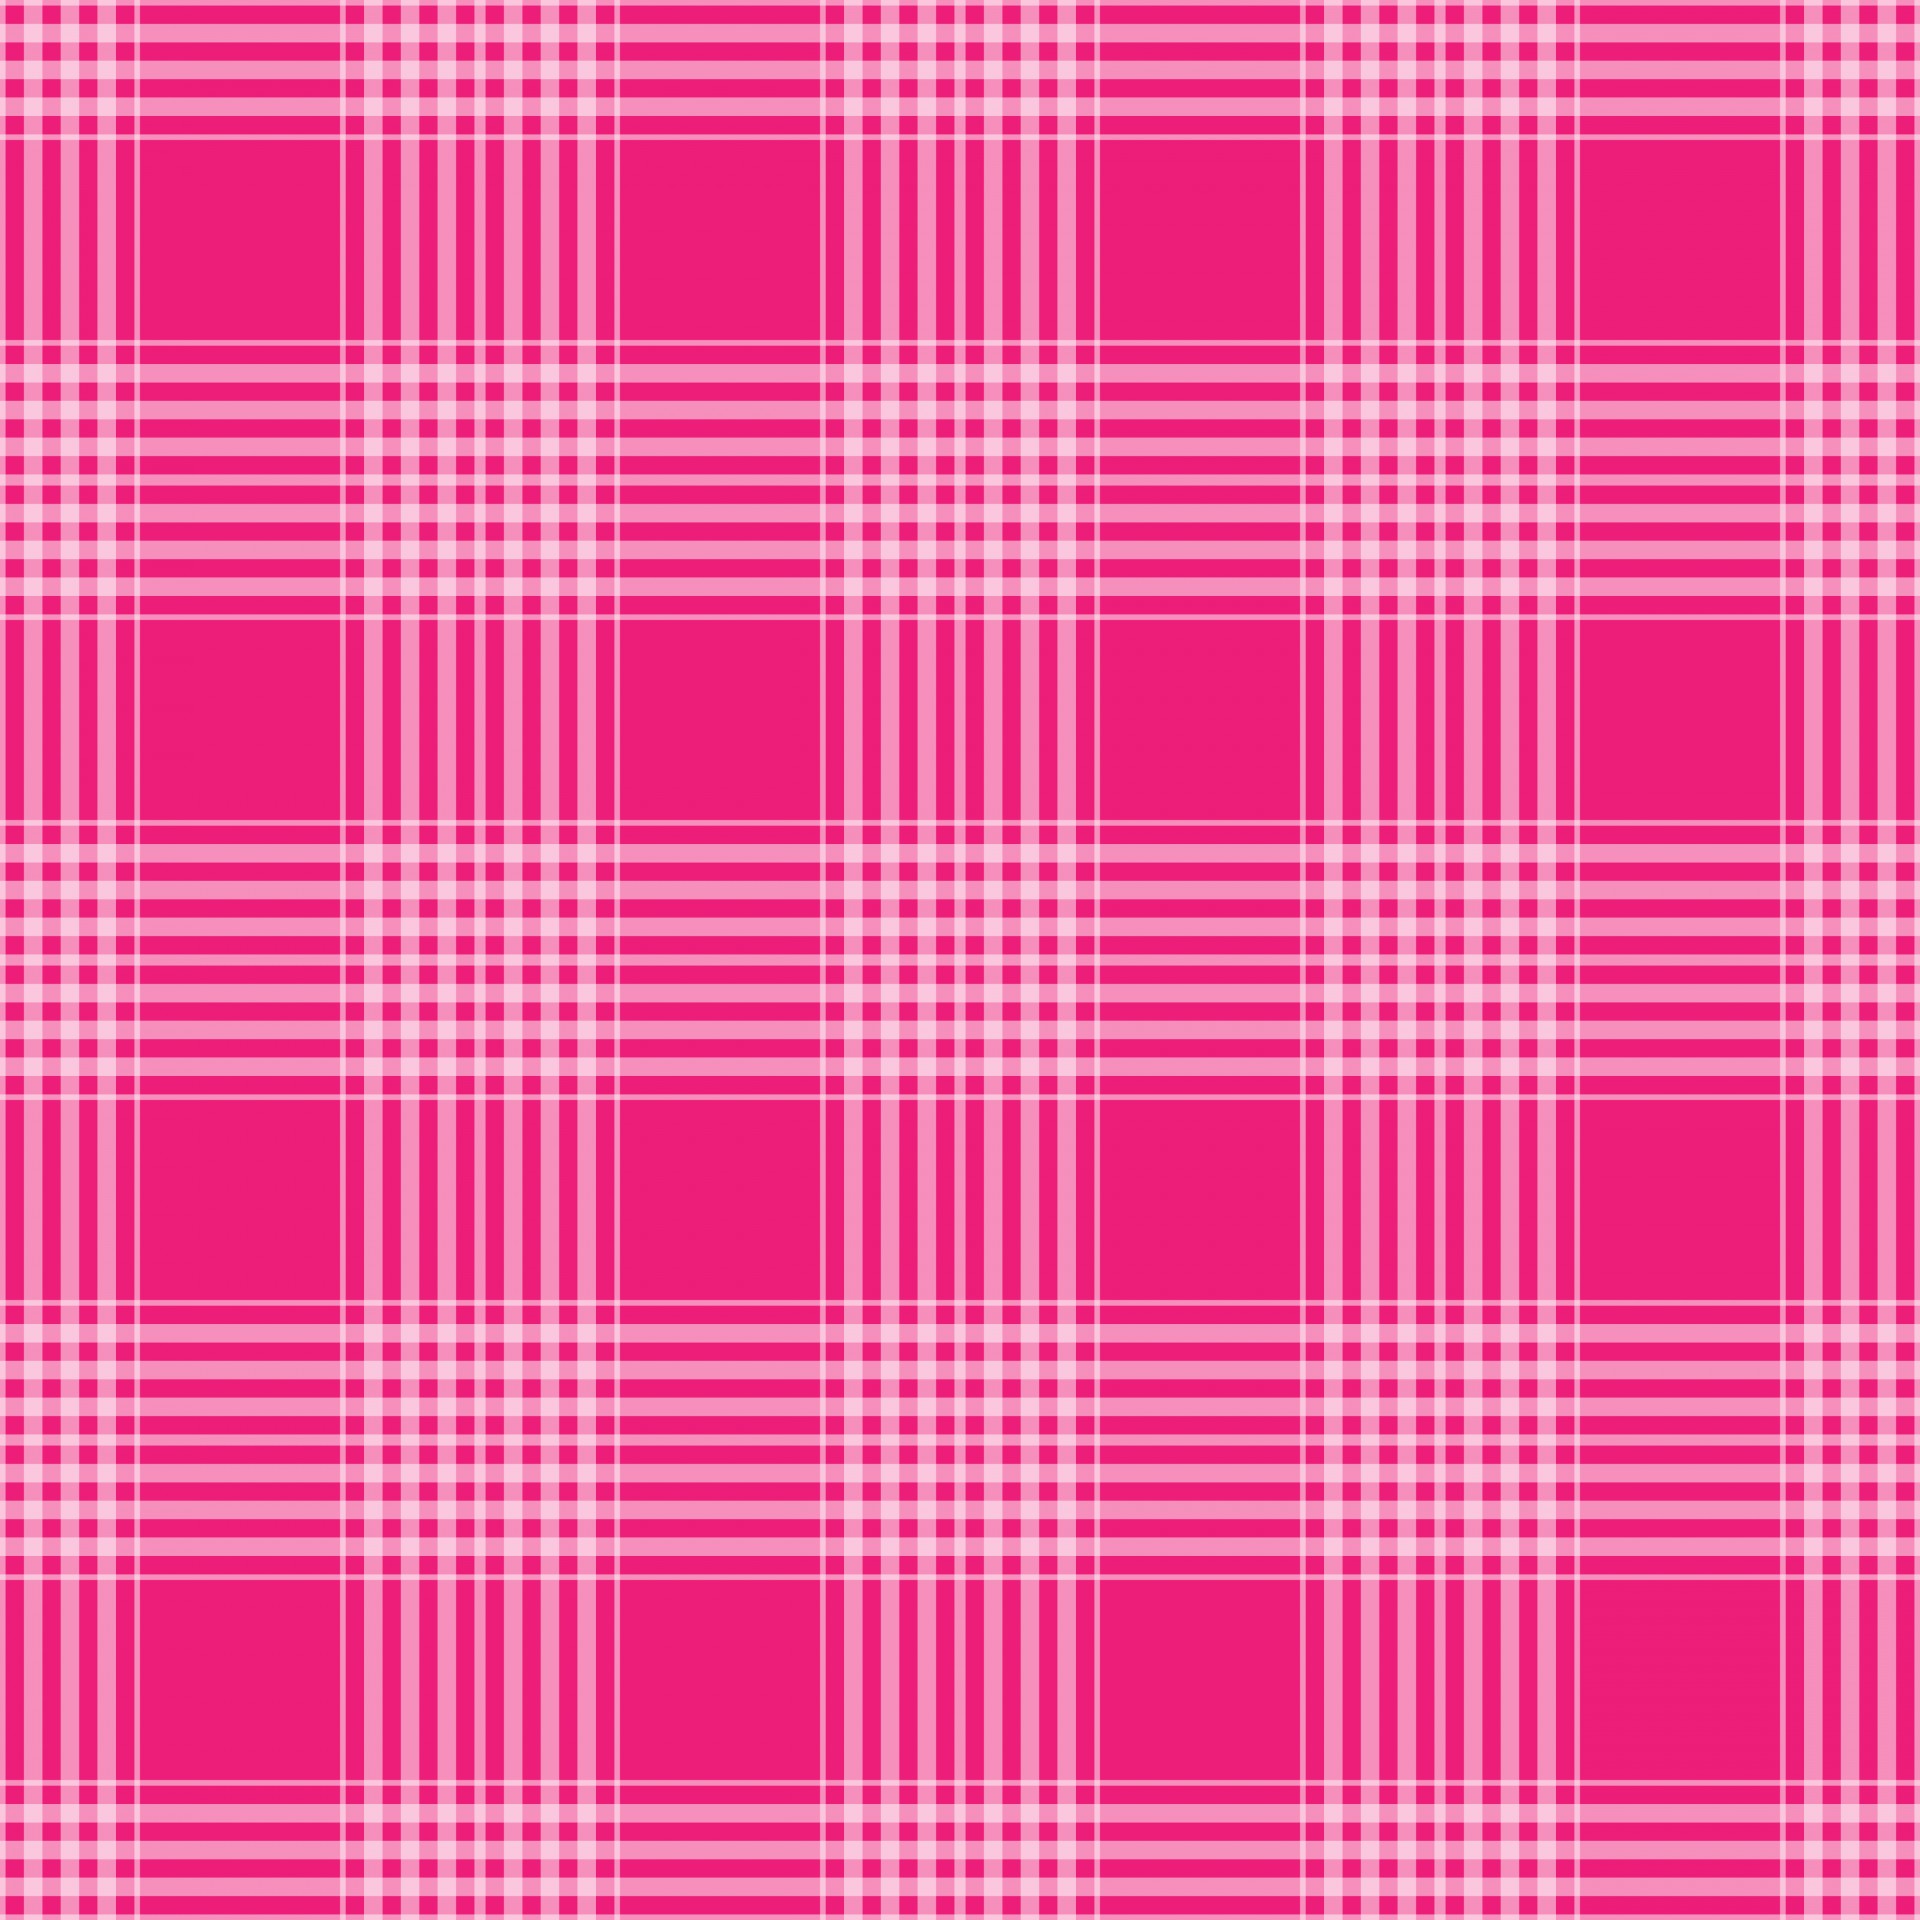 Download free photo of Checks,plaid,tartan,pink,wallpaper - from 